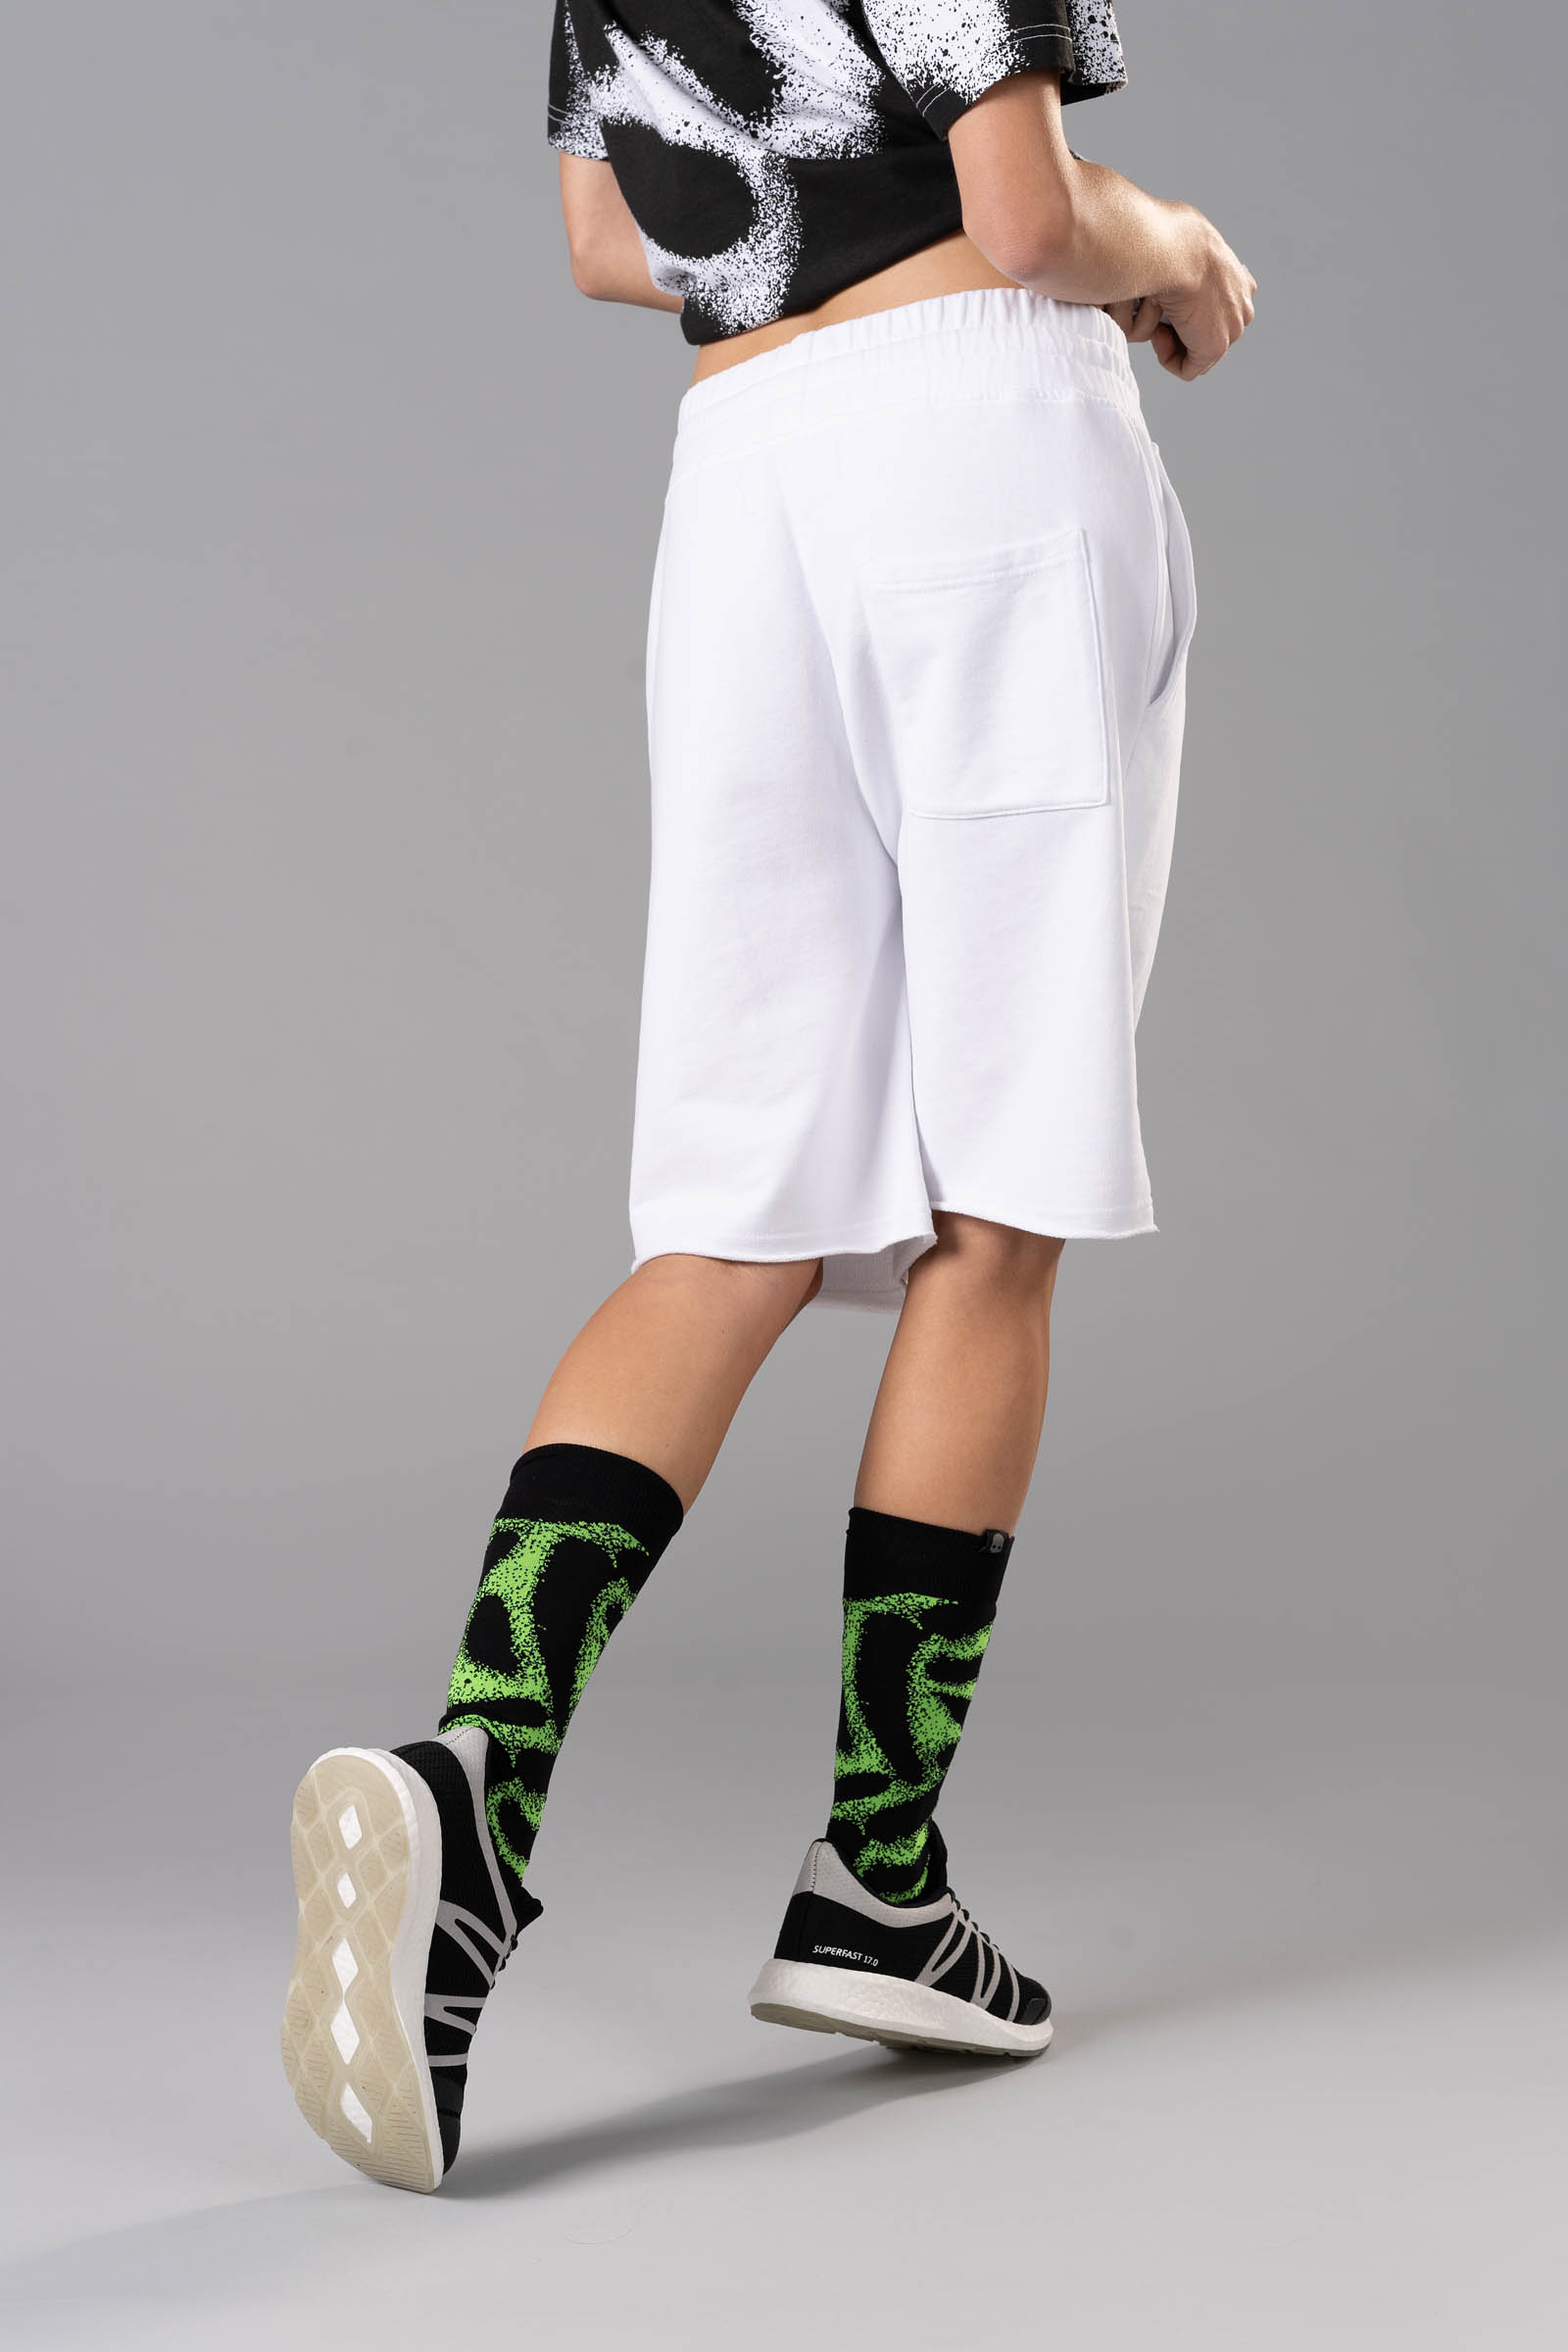 BENNY SHORTS - WHITE - Abbigliamento sportivo | Hydrogen